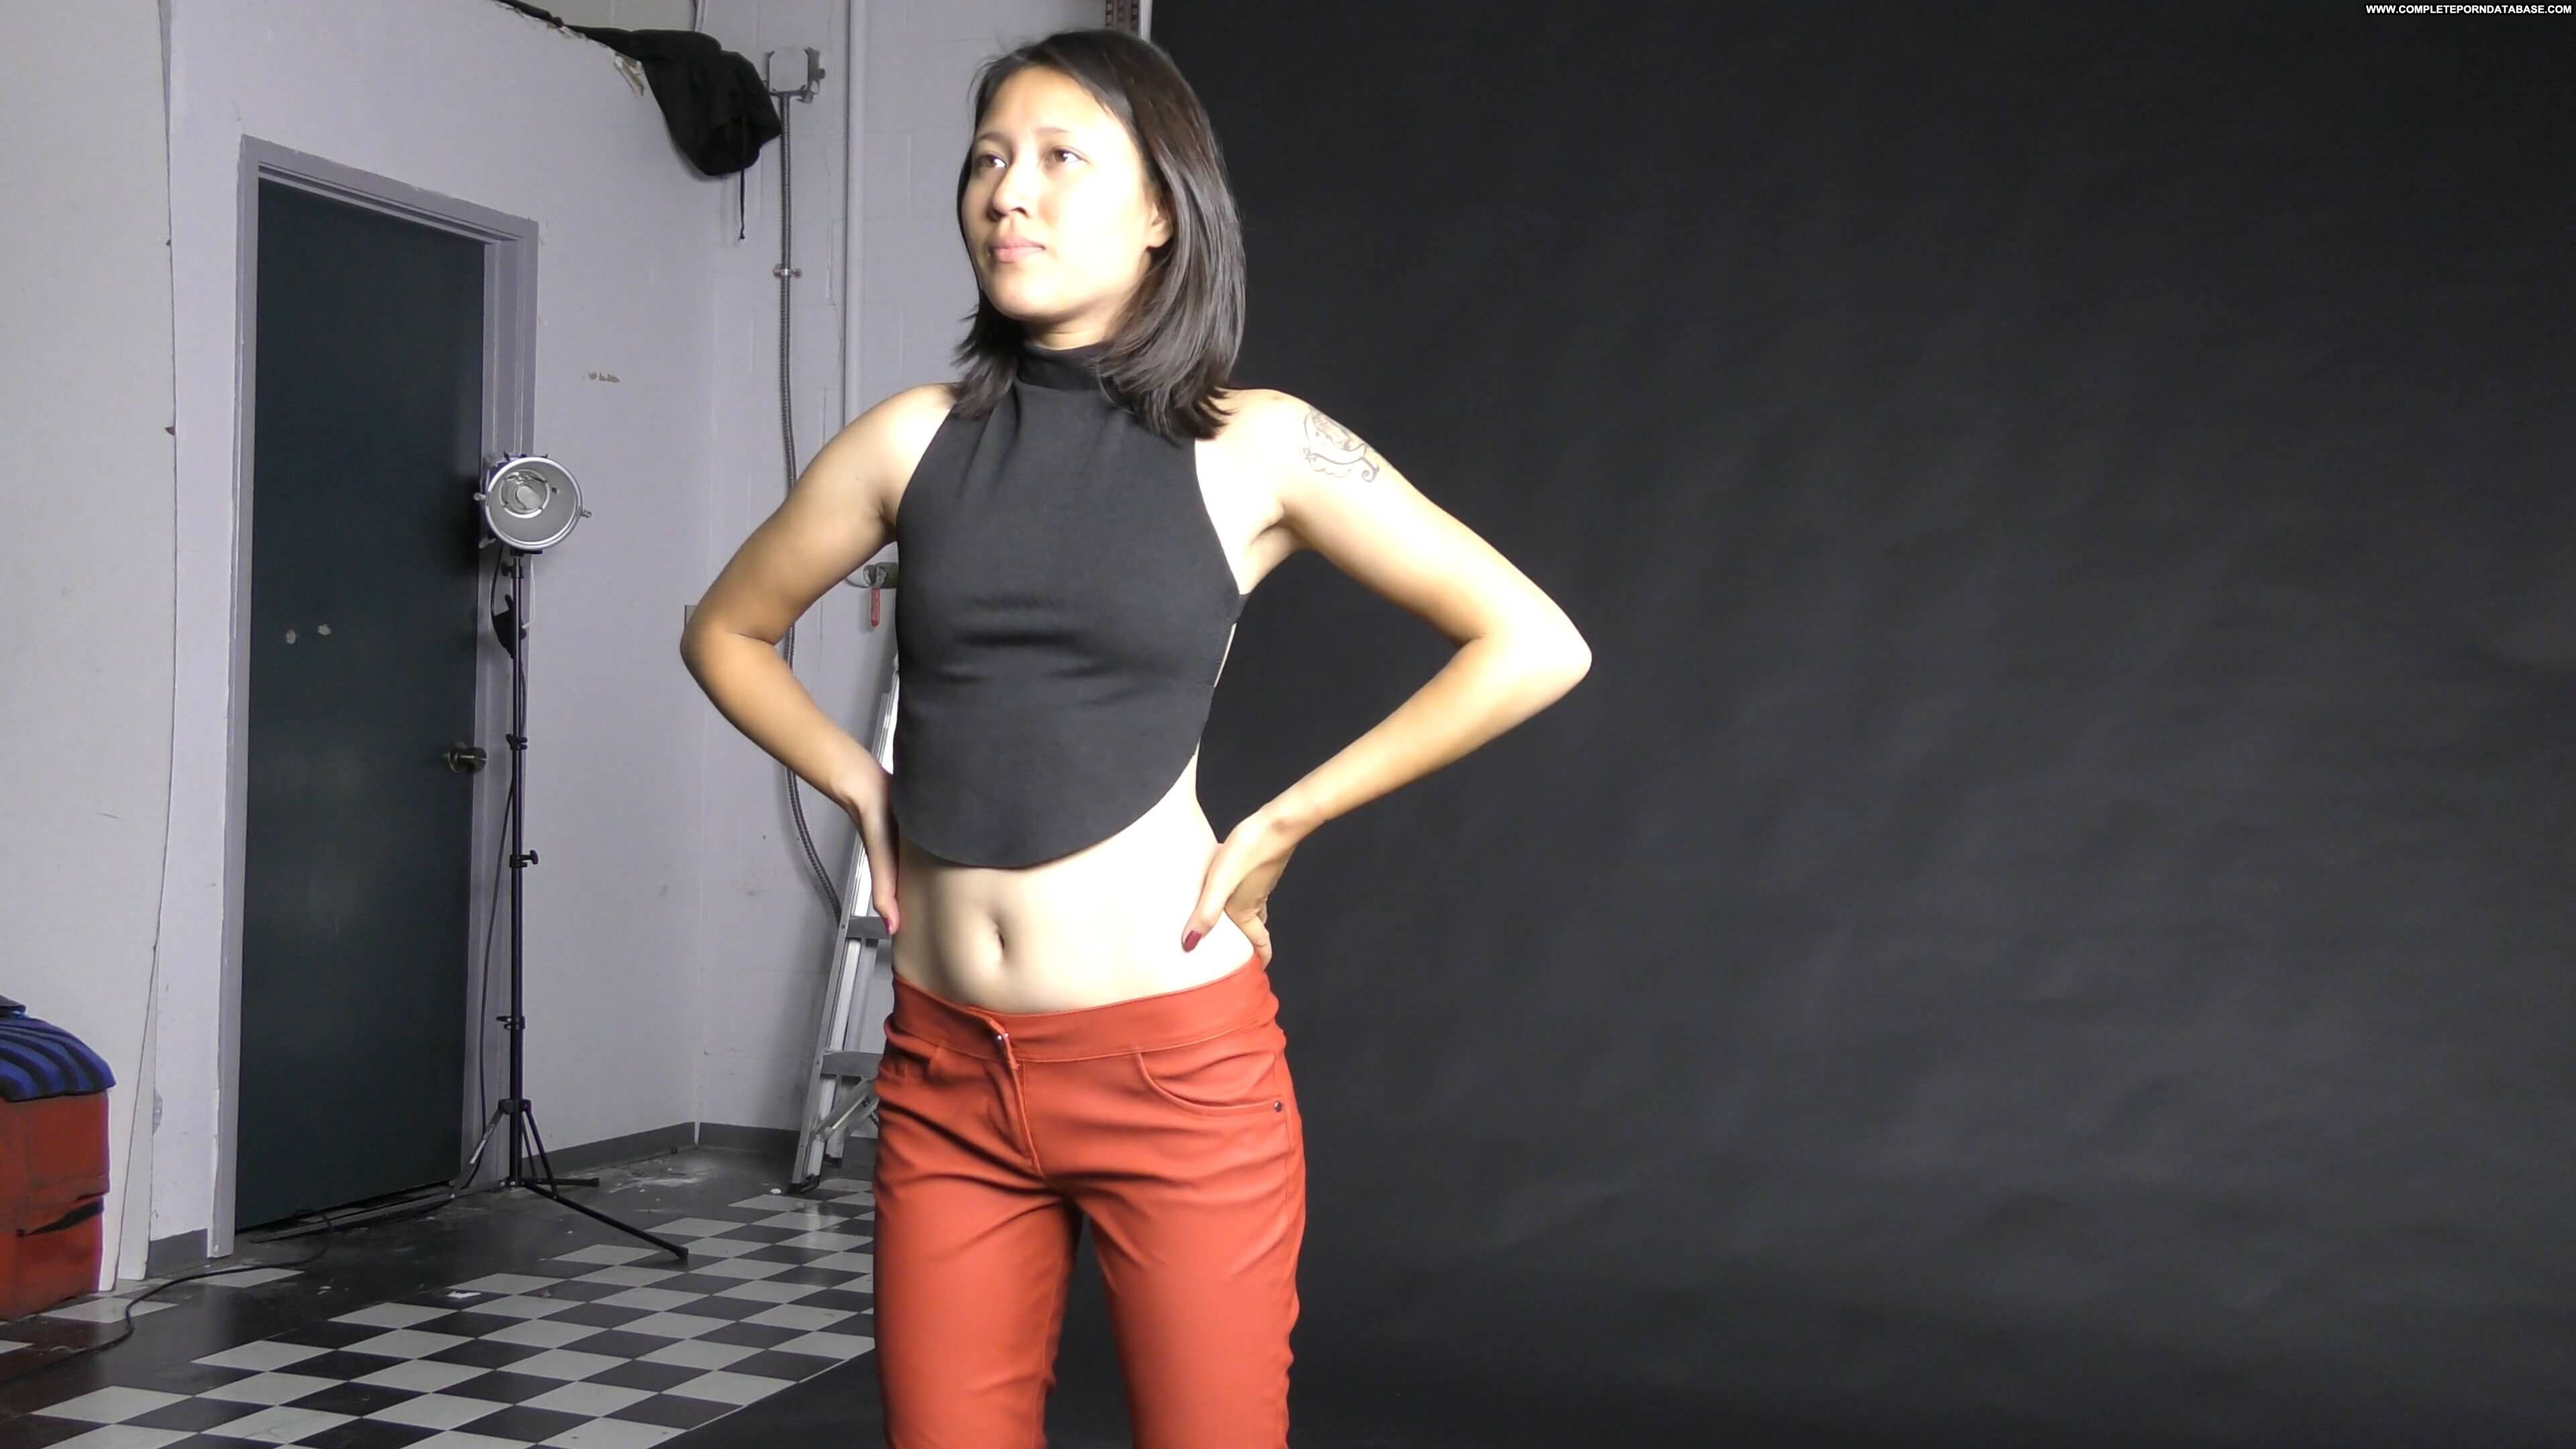 Emmalee Sex Posing Photoshoot Amateur Vid Asianamateur Vid Amateur